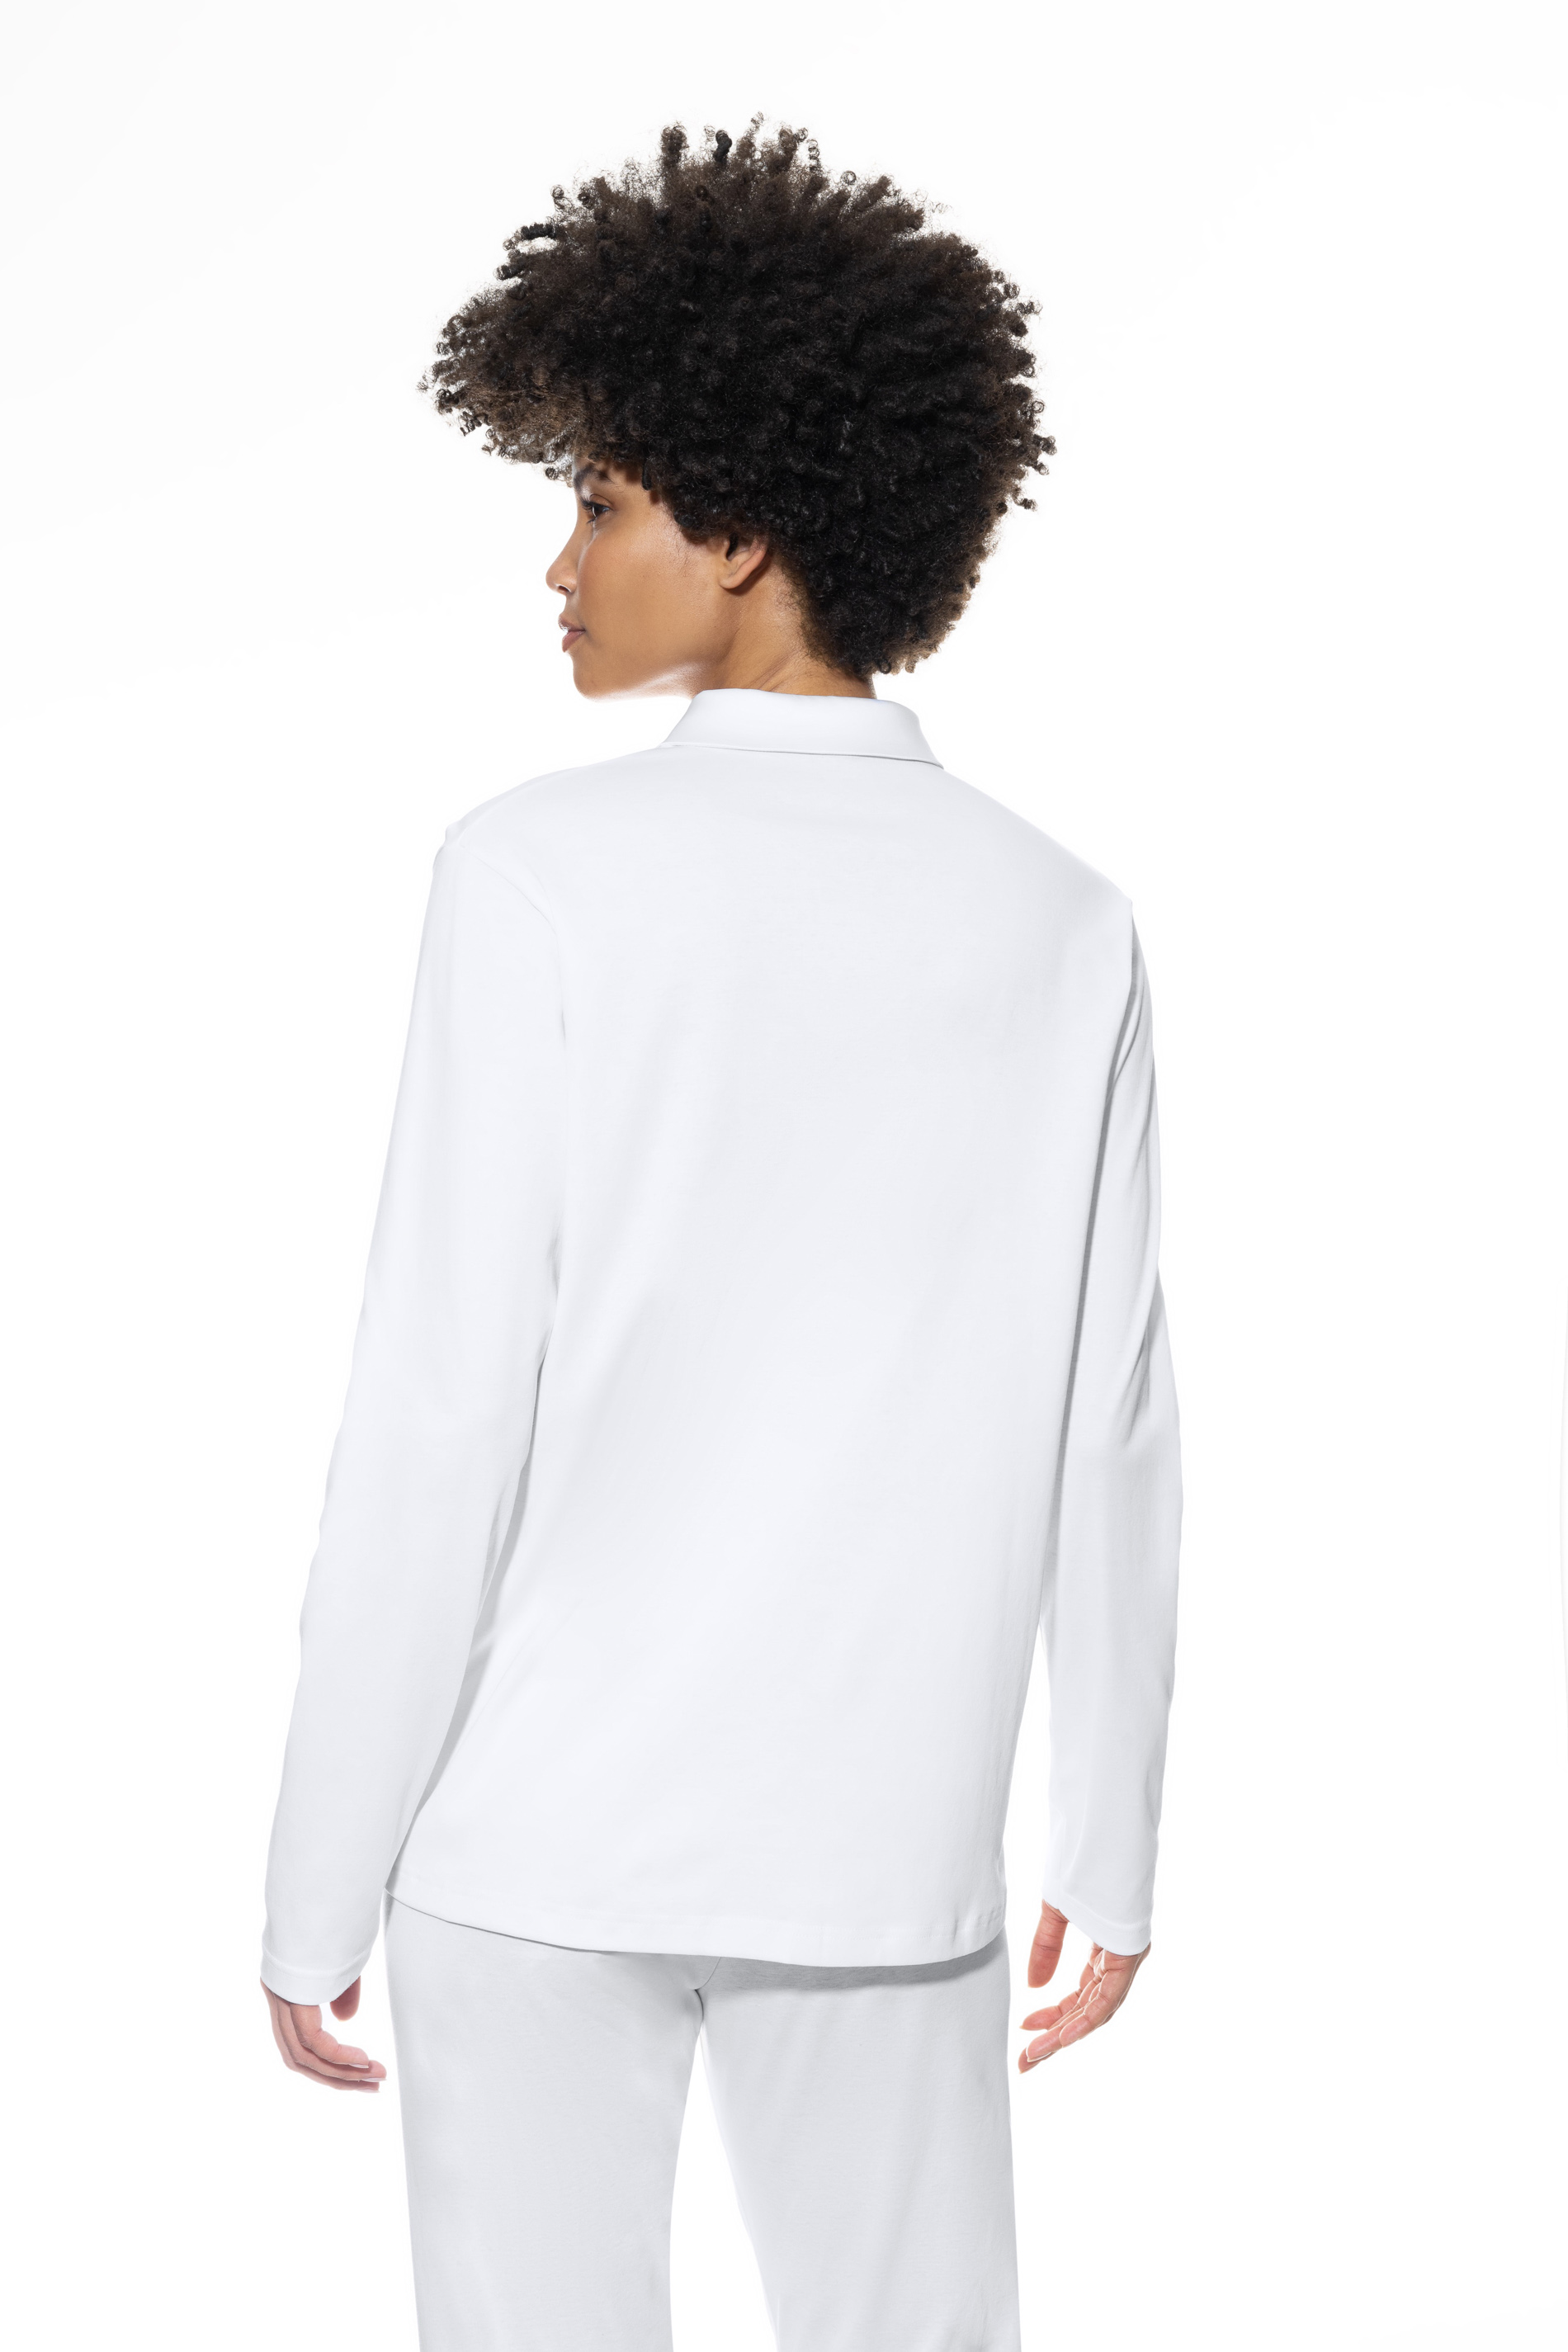 Pyjama shirt White Serie Sleepsation Rear View | mey®